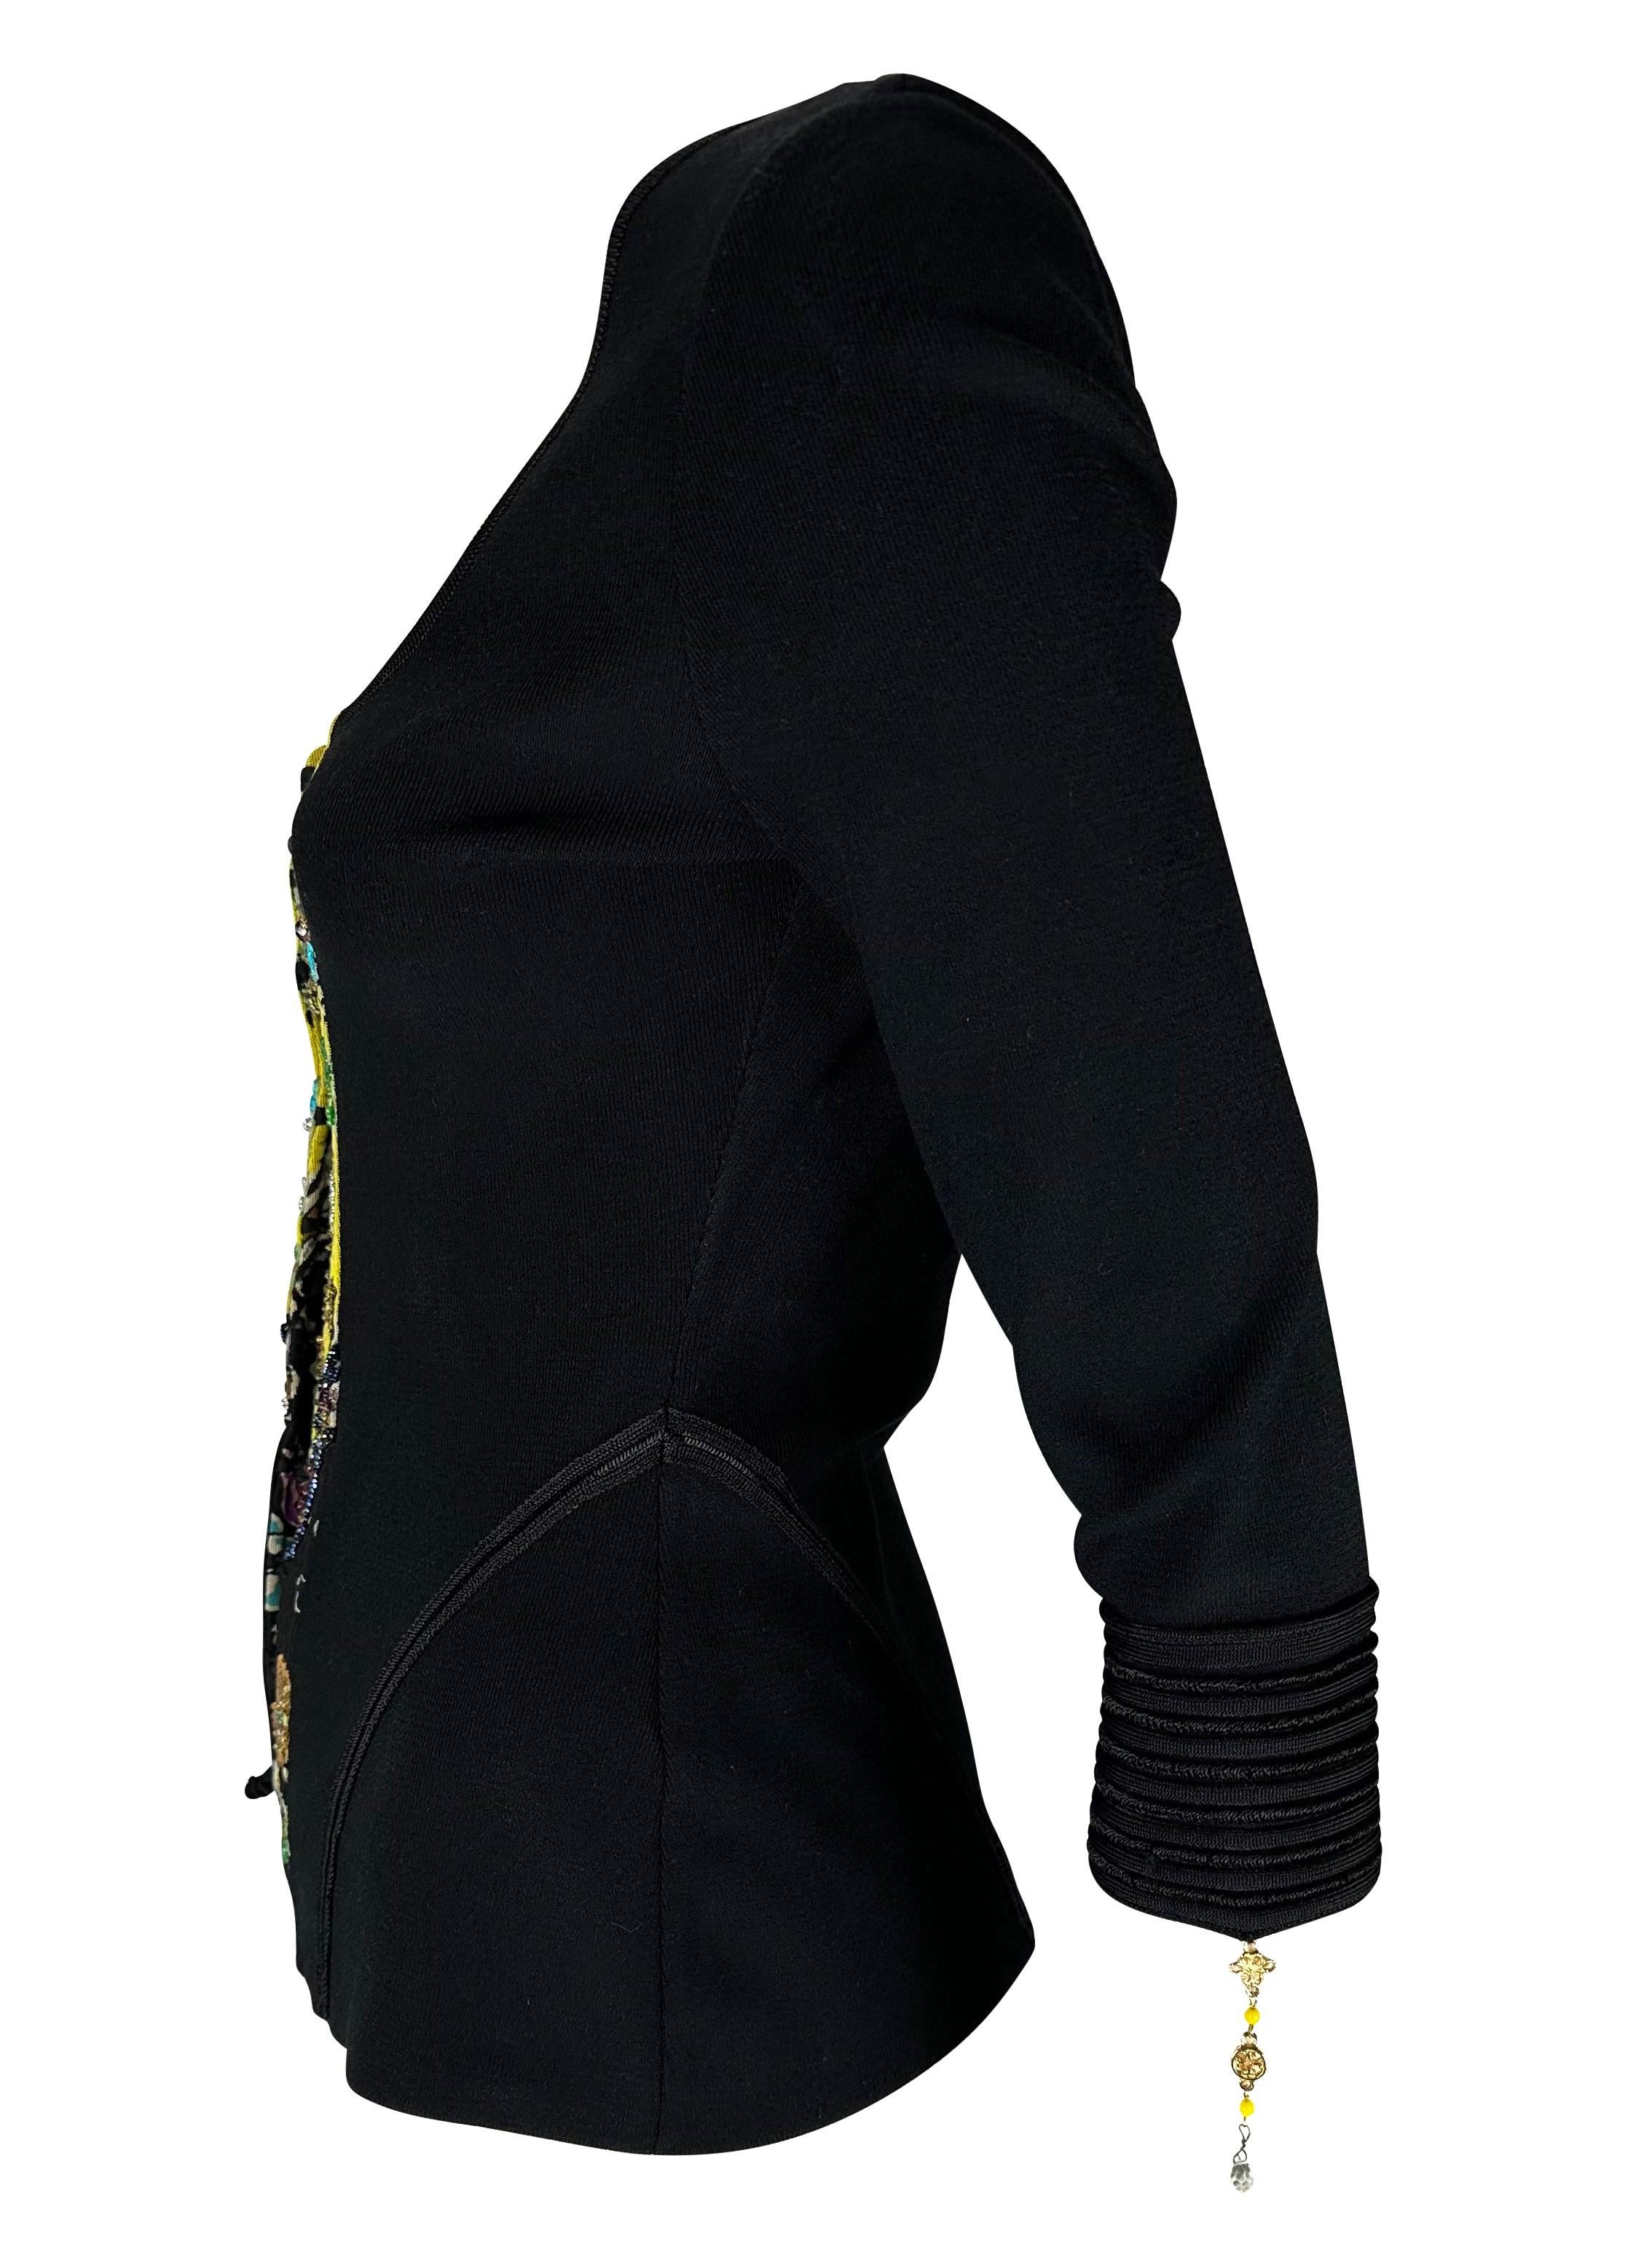 S/S 2003 Roberto Cavalli Charm Yellow Chinoiserie Beaded Black Sweater Pour femmes en vente